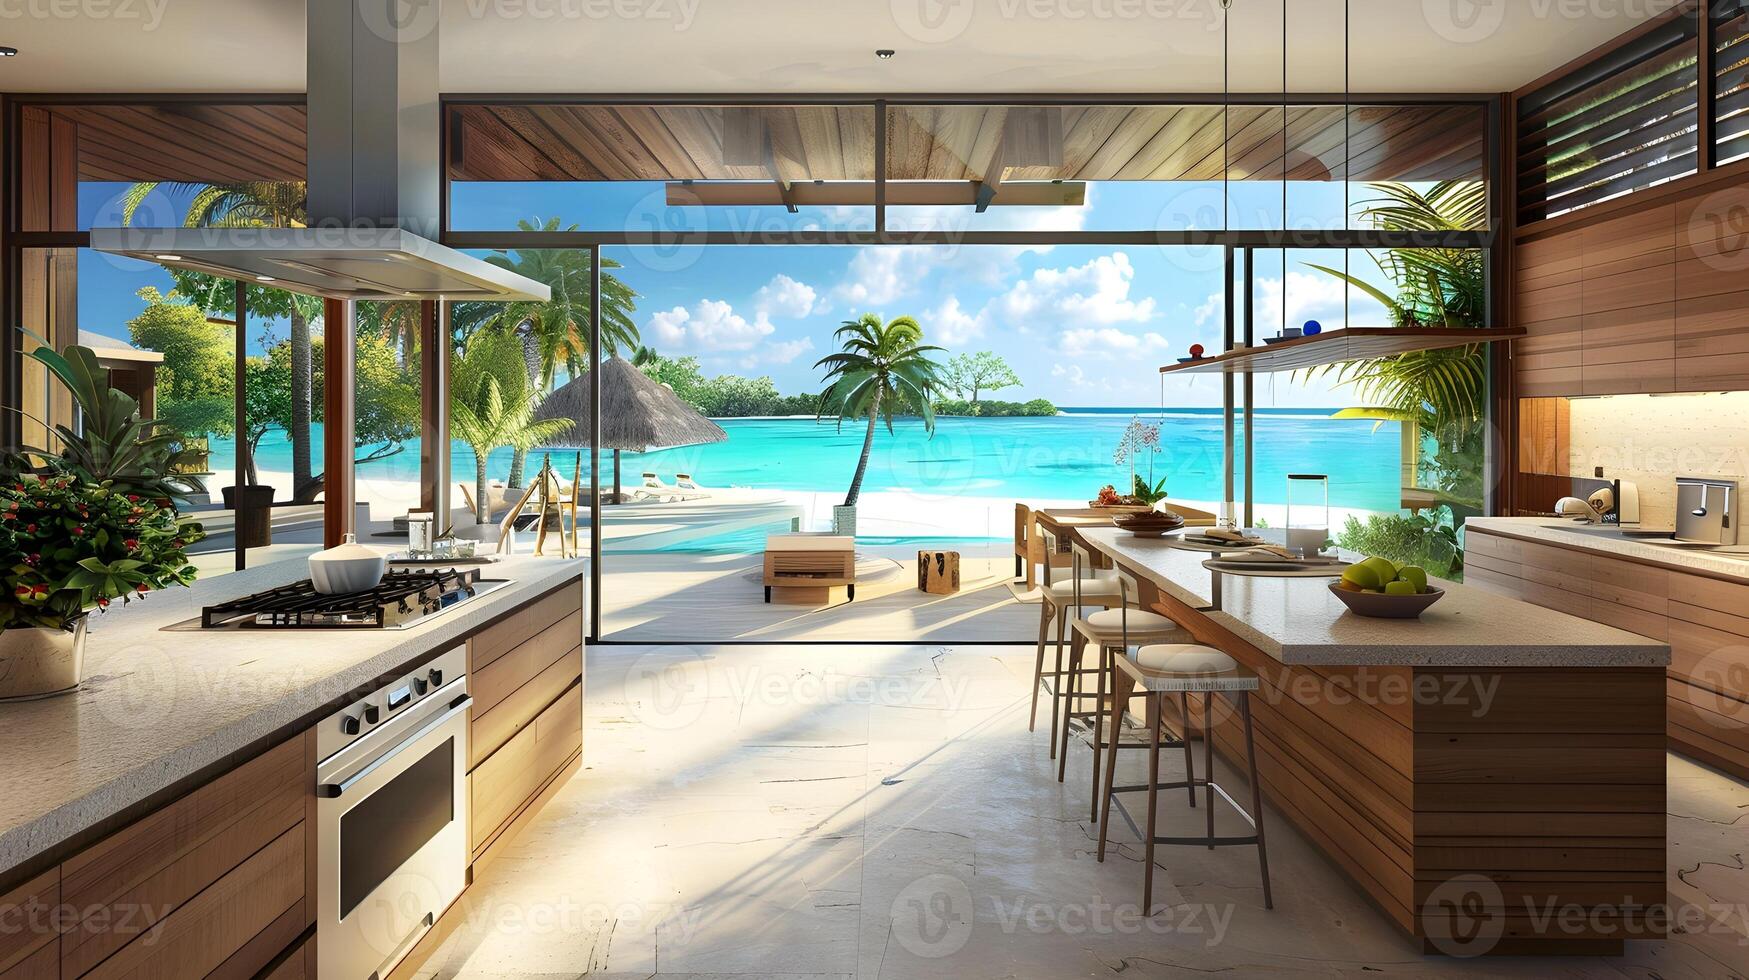 Ultramodern Kitchen with Zebrano Wood Textures and Panoramic Views of Azure Lagoon photo